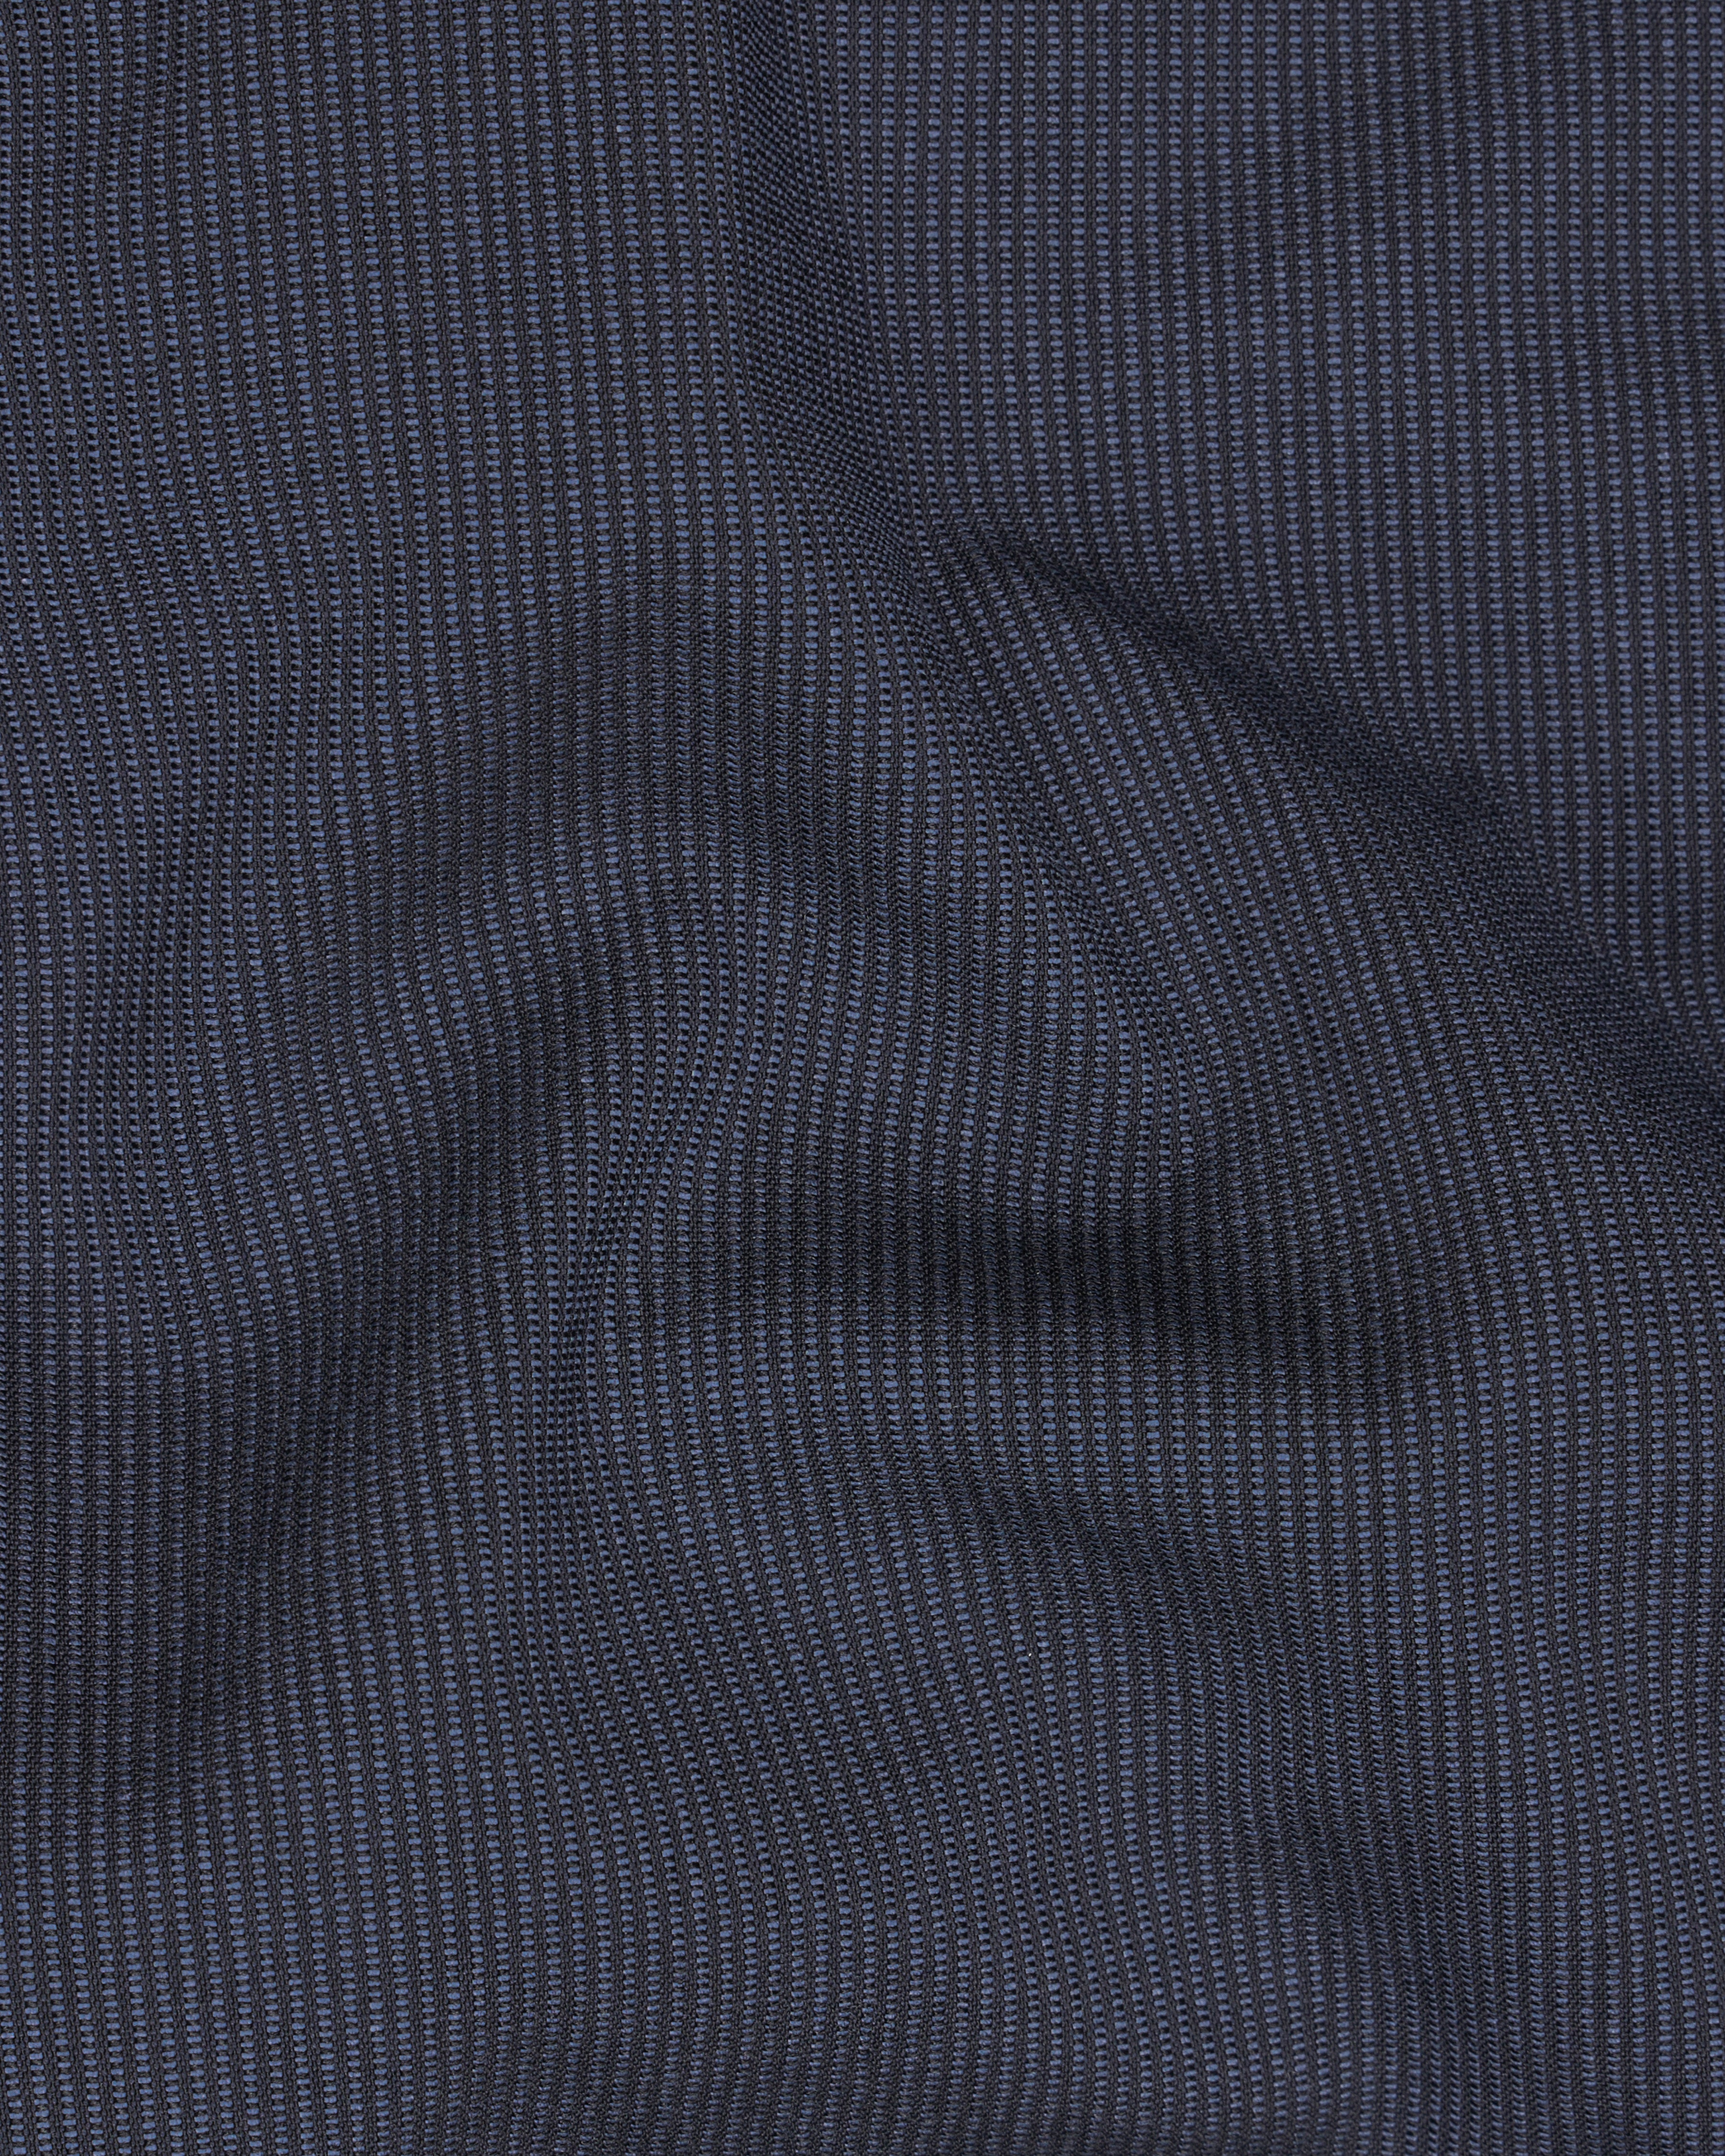 Shark Blue Textured Waistcoat V2601-36, V2601-38, V2601-40, V2601-42, V2601-44, V2601-46, V2601-48, V2601-50, V2601-52, V2601-54, V2601-56, V2601-58, V2601-60